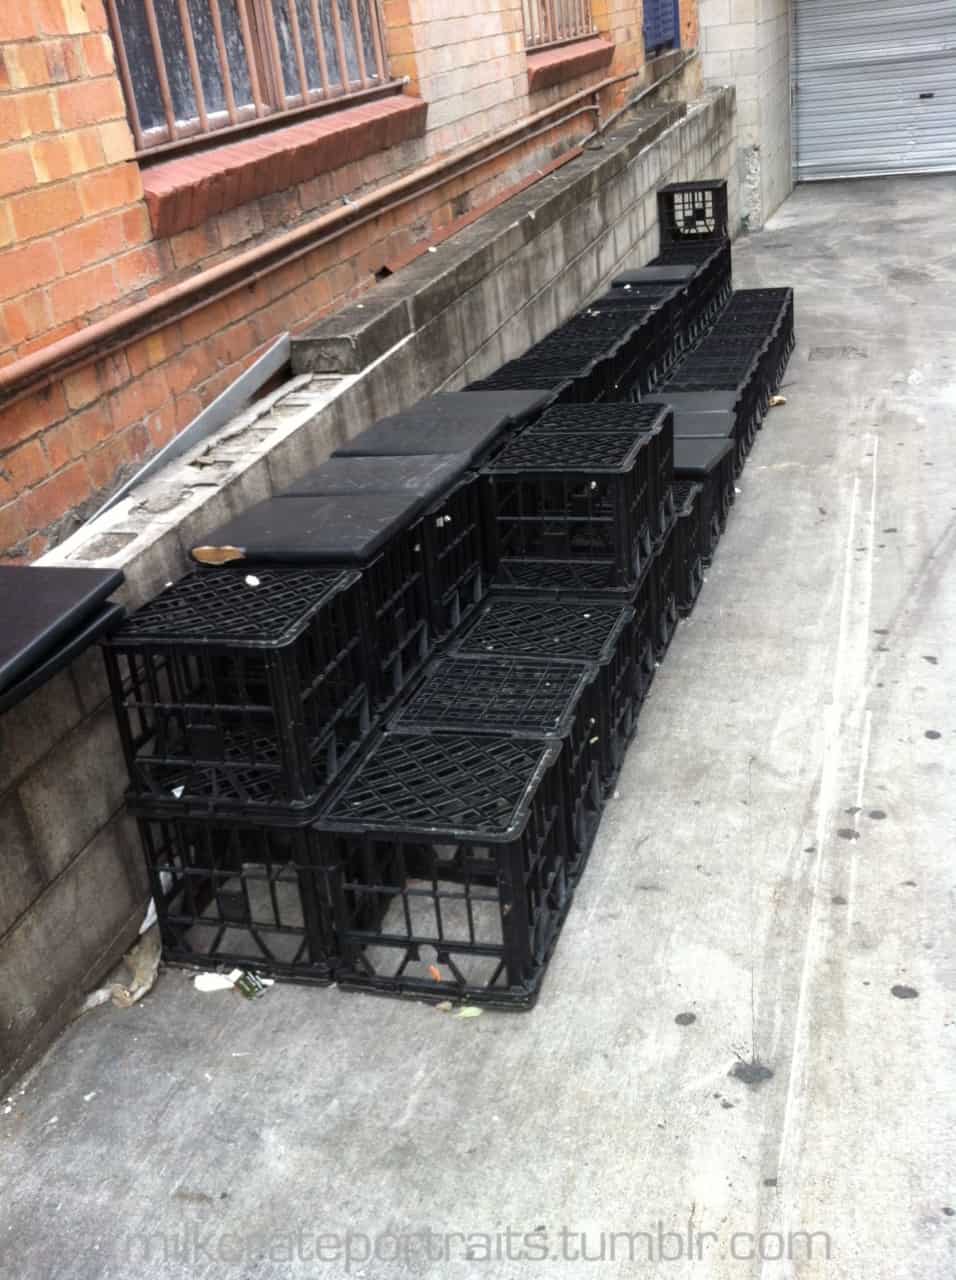 Impressive collection of black milk crates